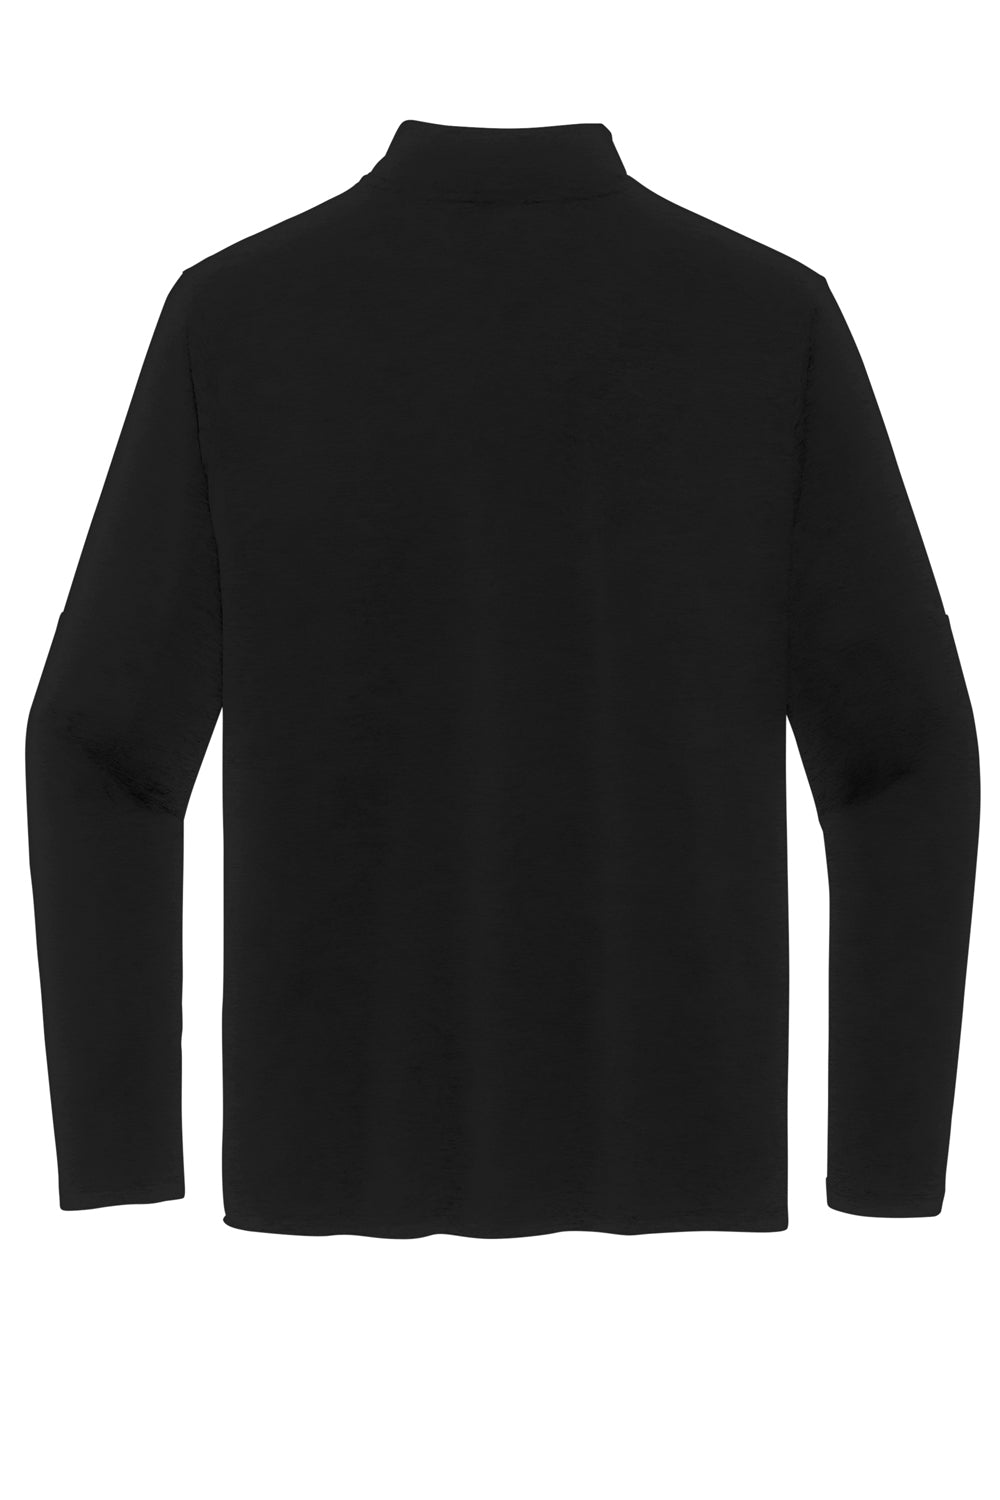 Nike NKDH4949 Mens Element Dri-Fit Moisture Wicking 1/4 Zip Sweatshirt Black Flat Back